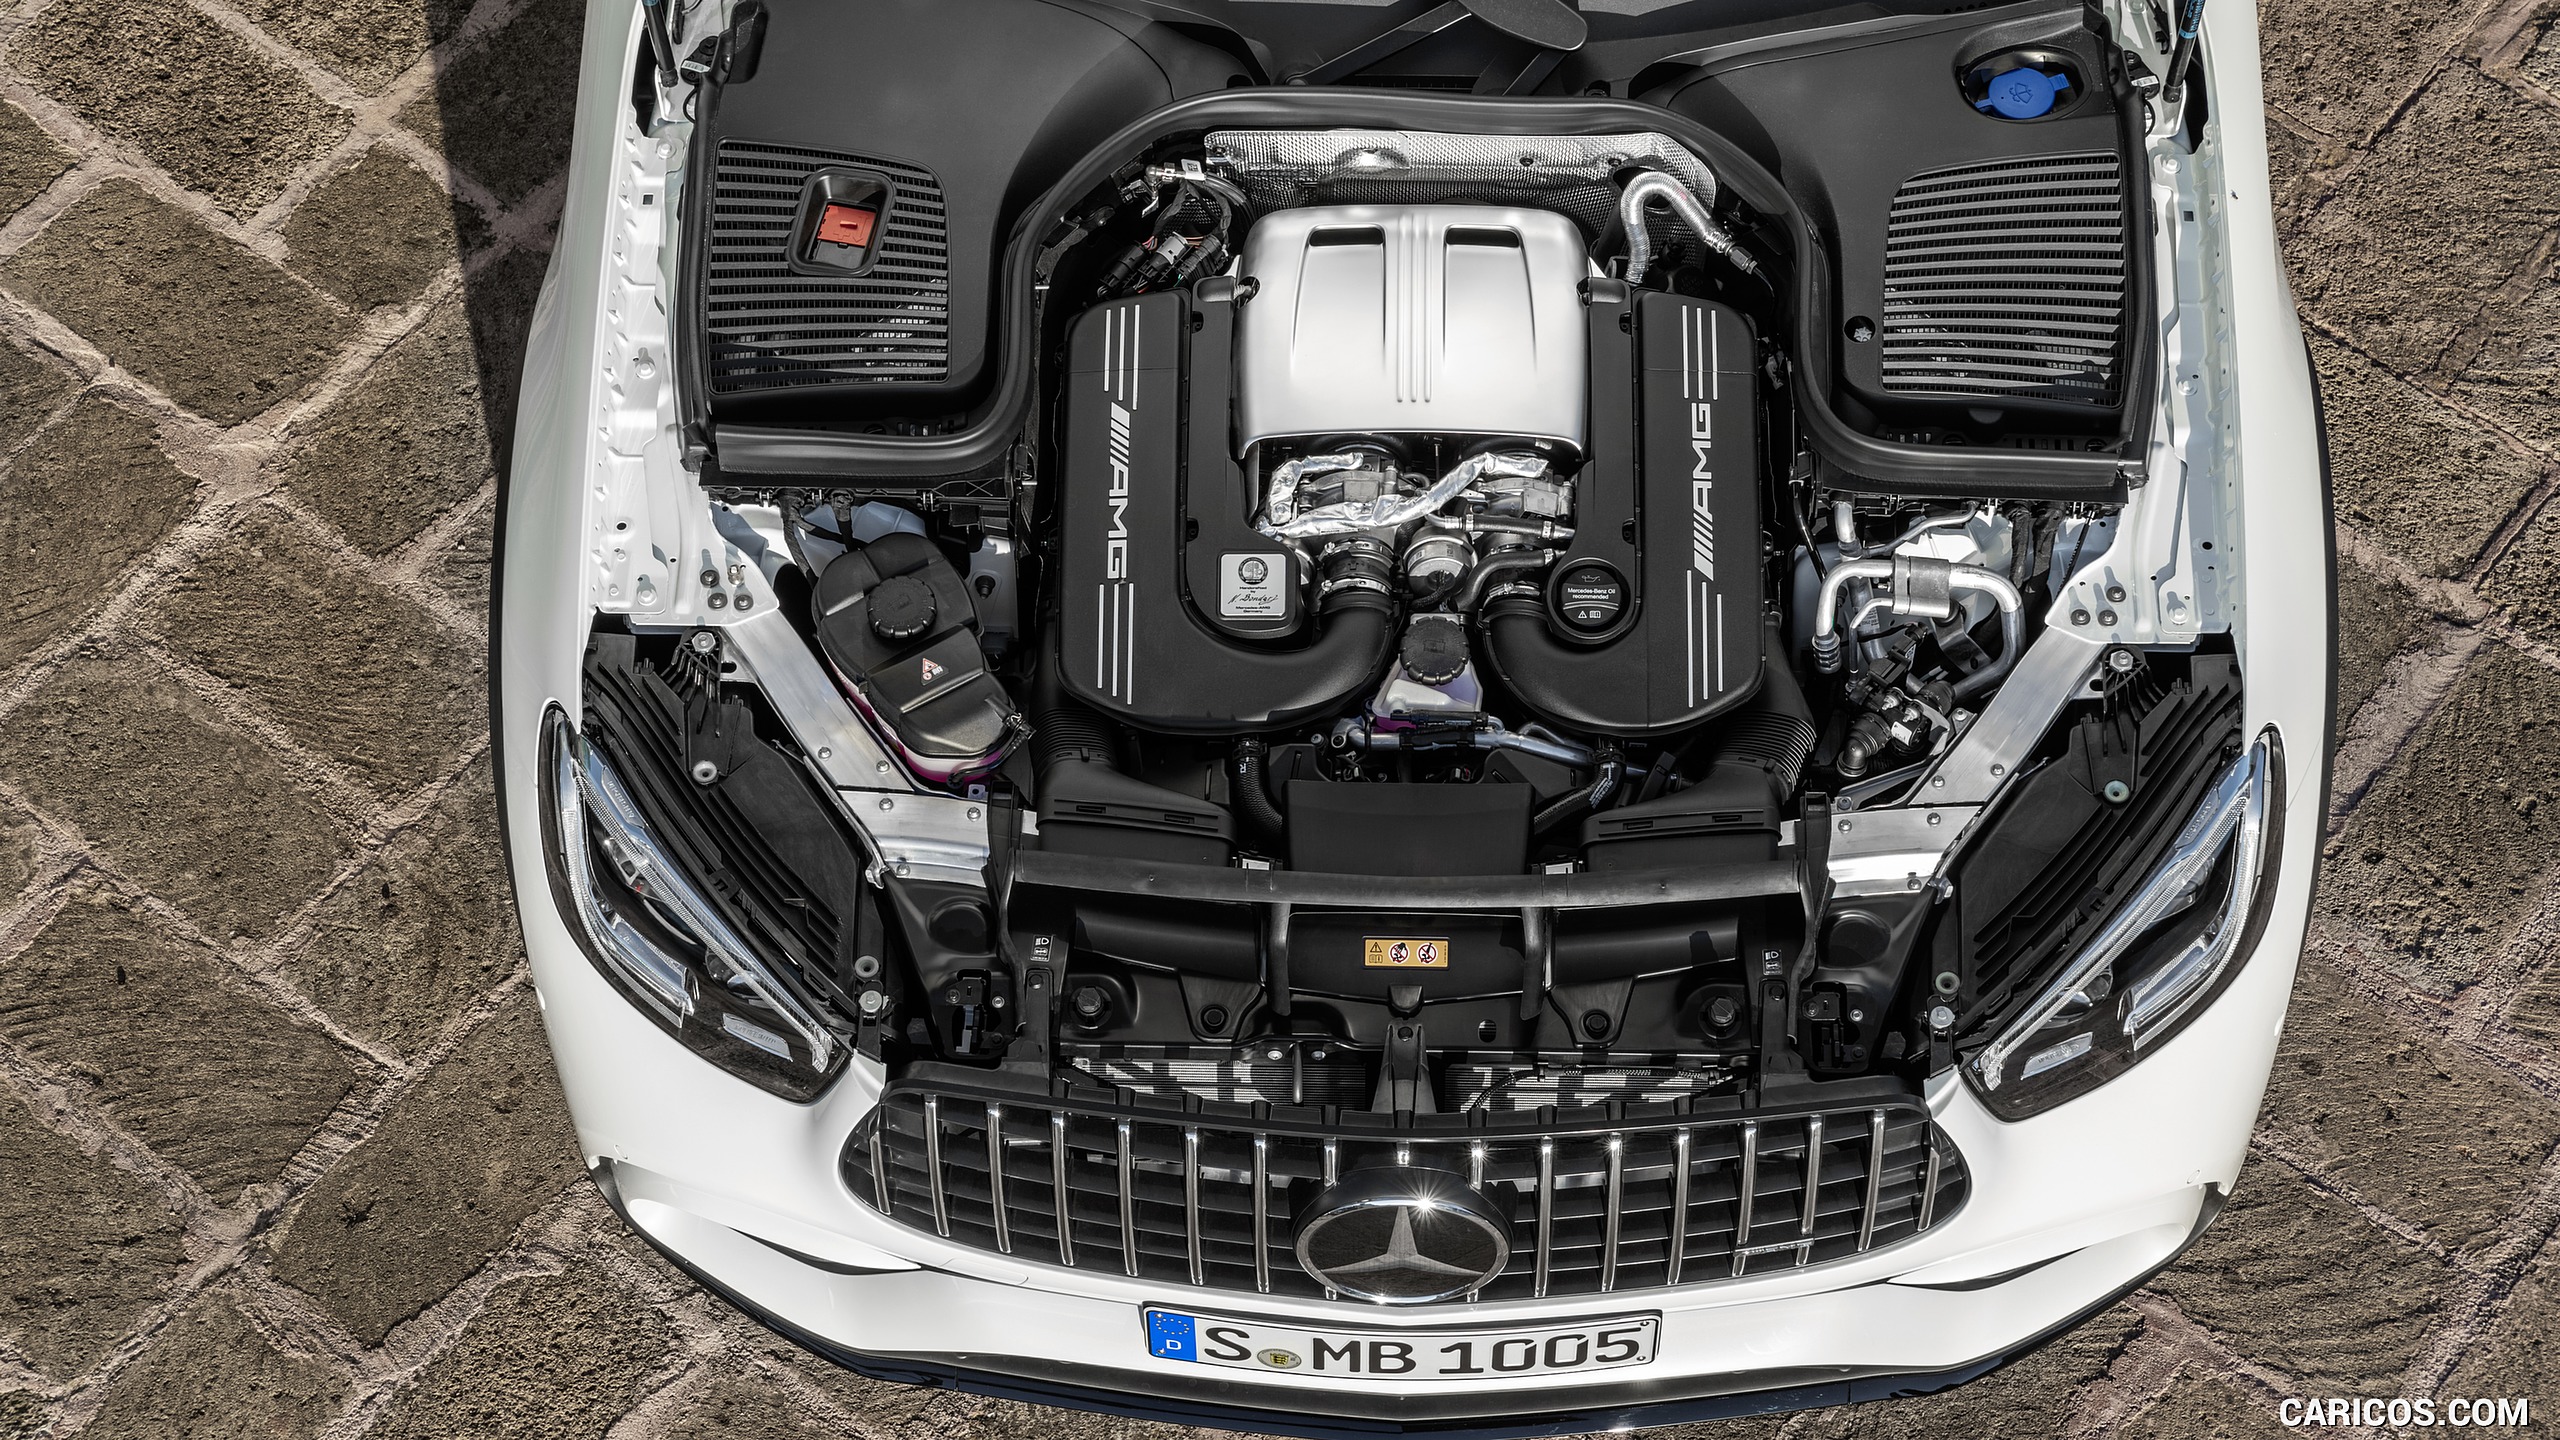 2020 Mercedes-AMG GLC 63 S 4MATIC+ - Engine, #31 of 118